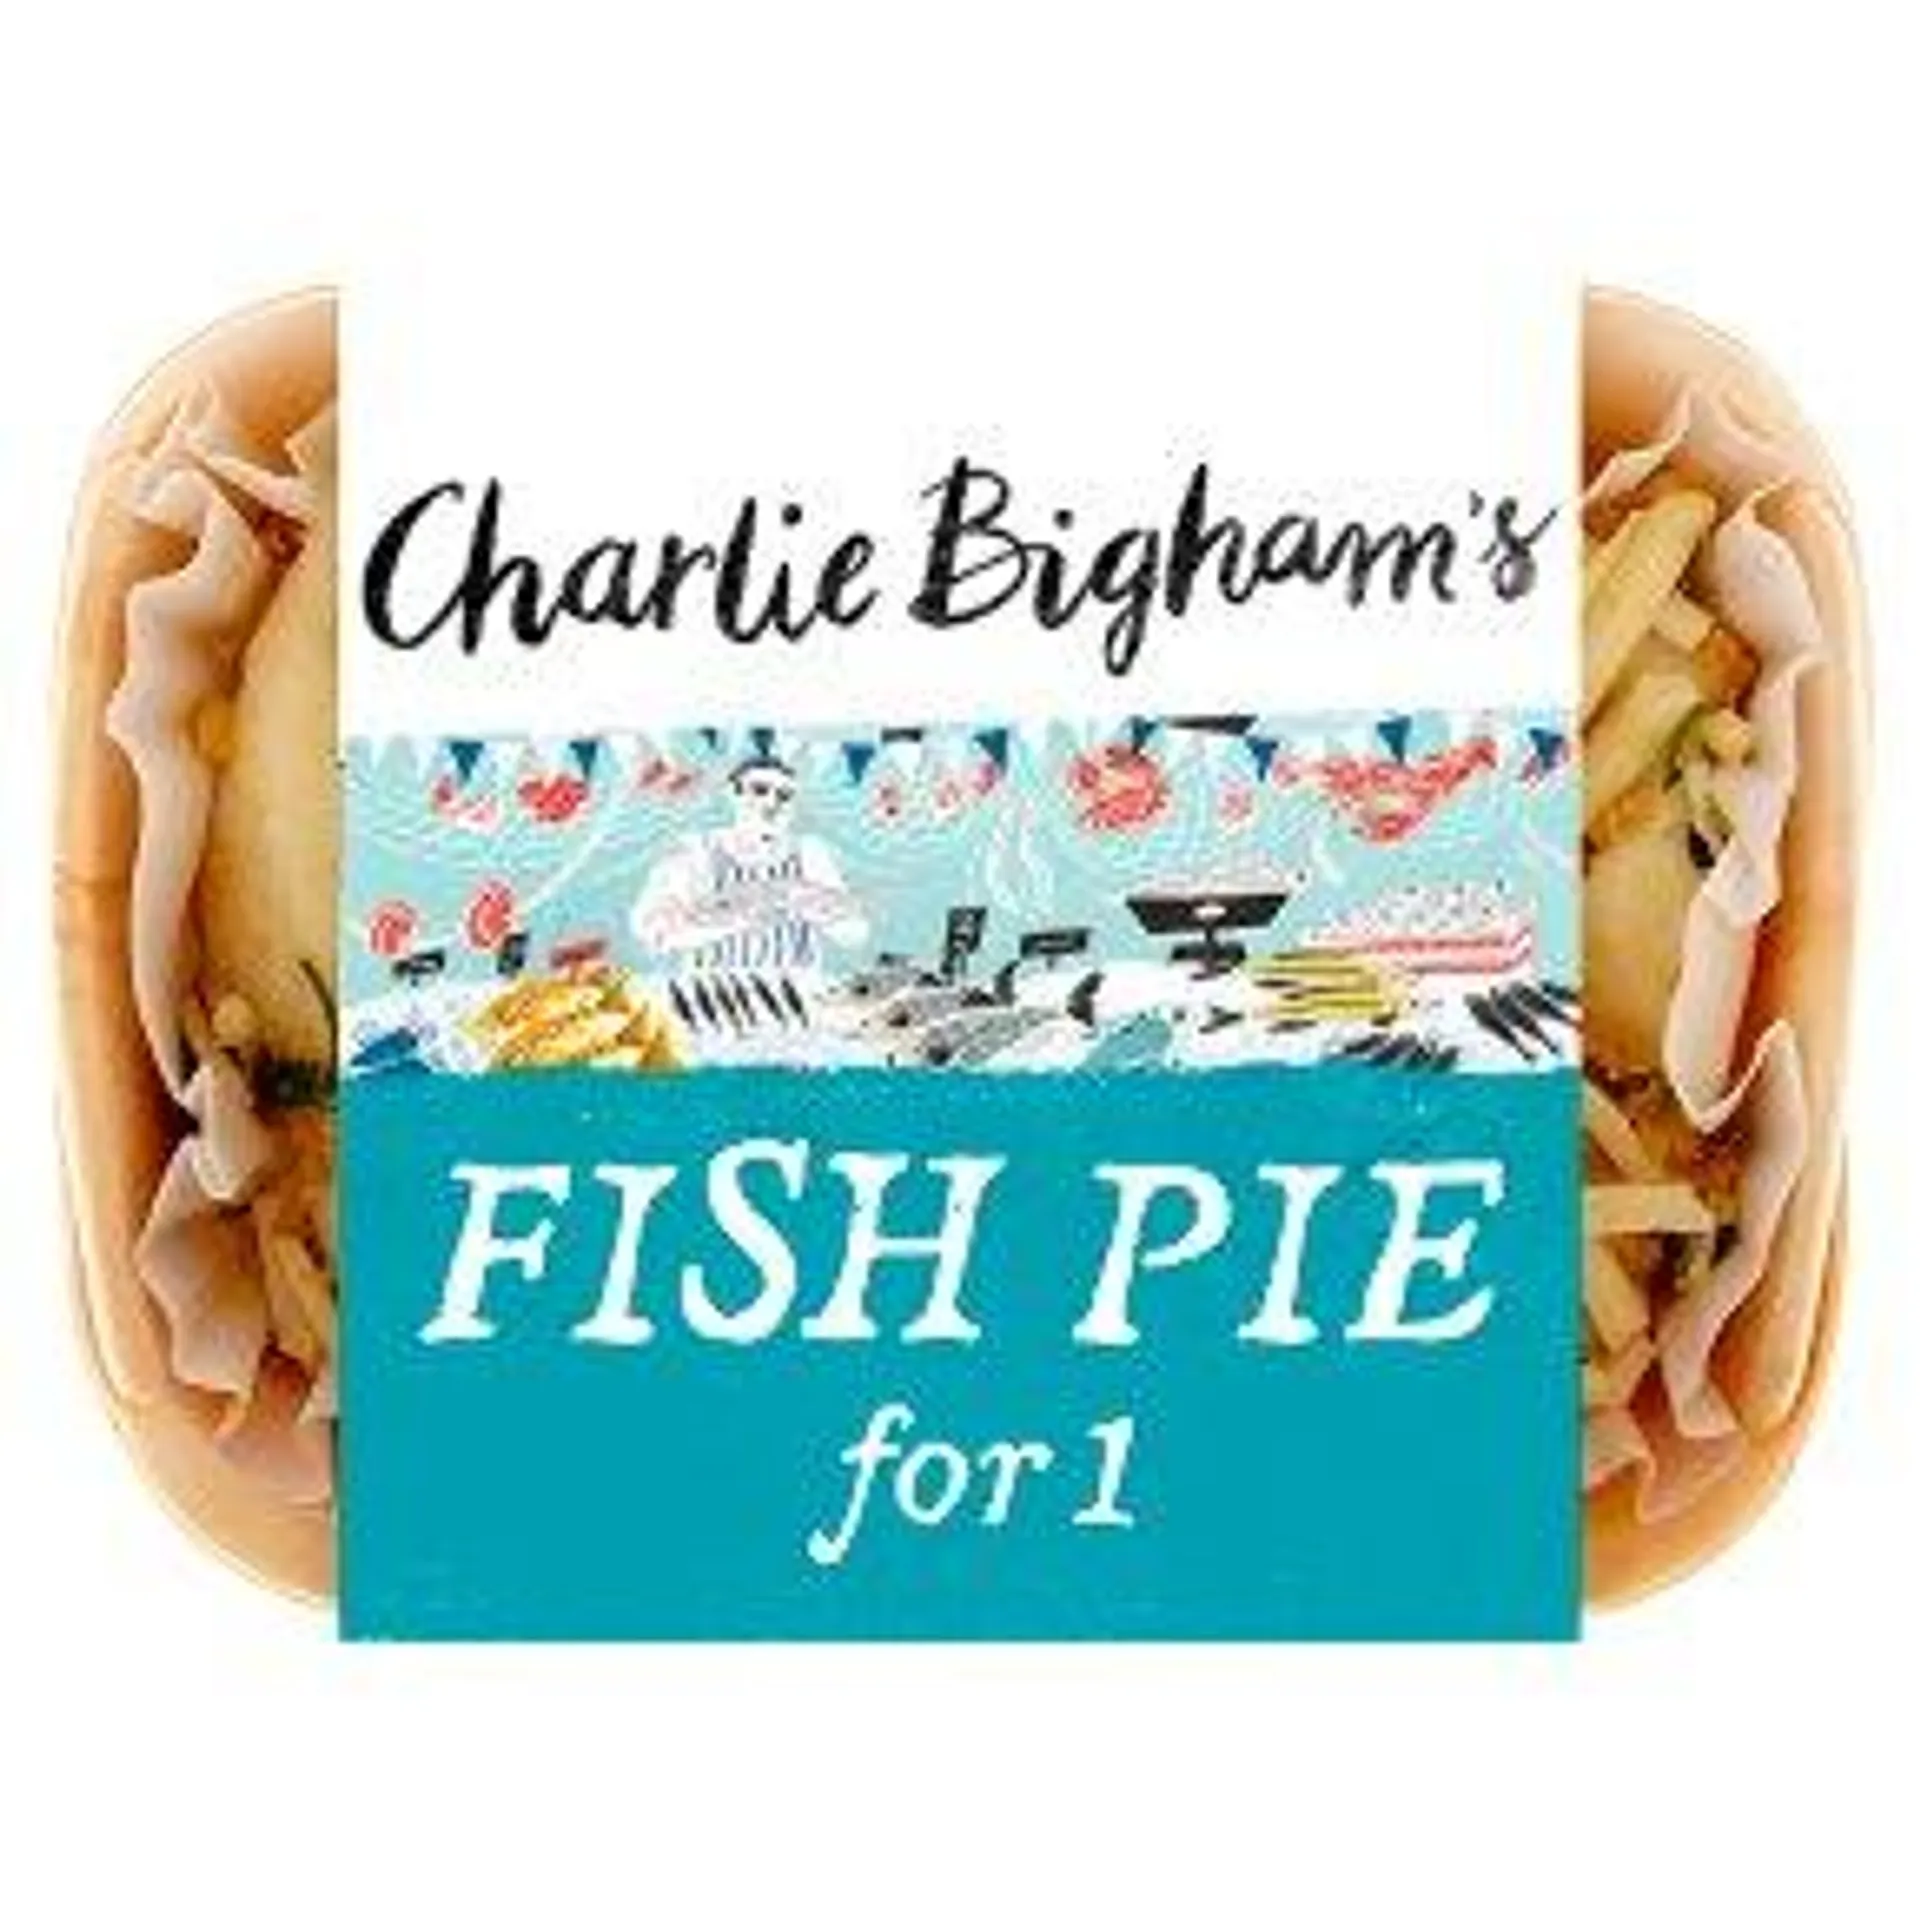 Charlie Bighams Fish Pie